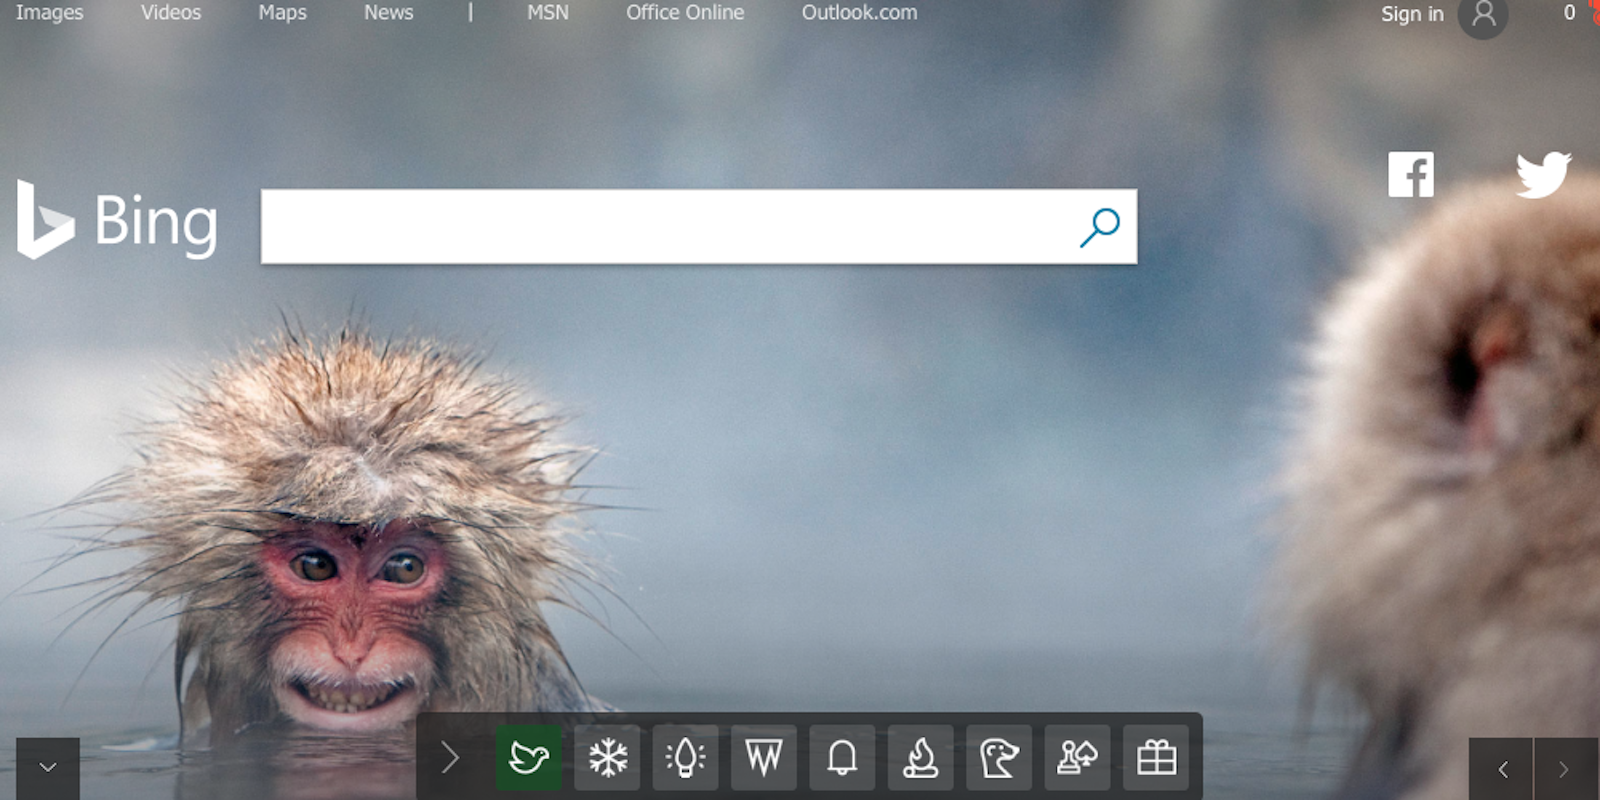 Bing homepage with snow monkeys